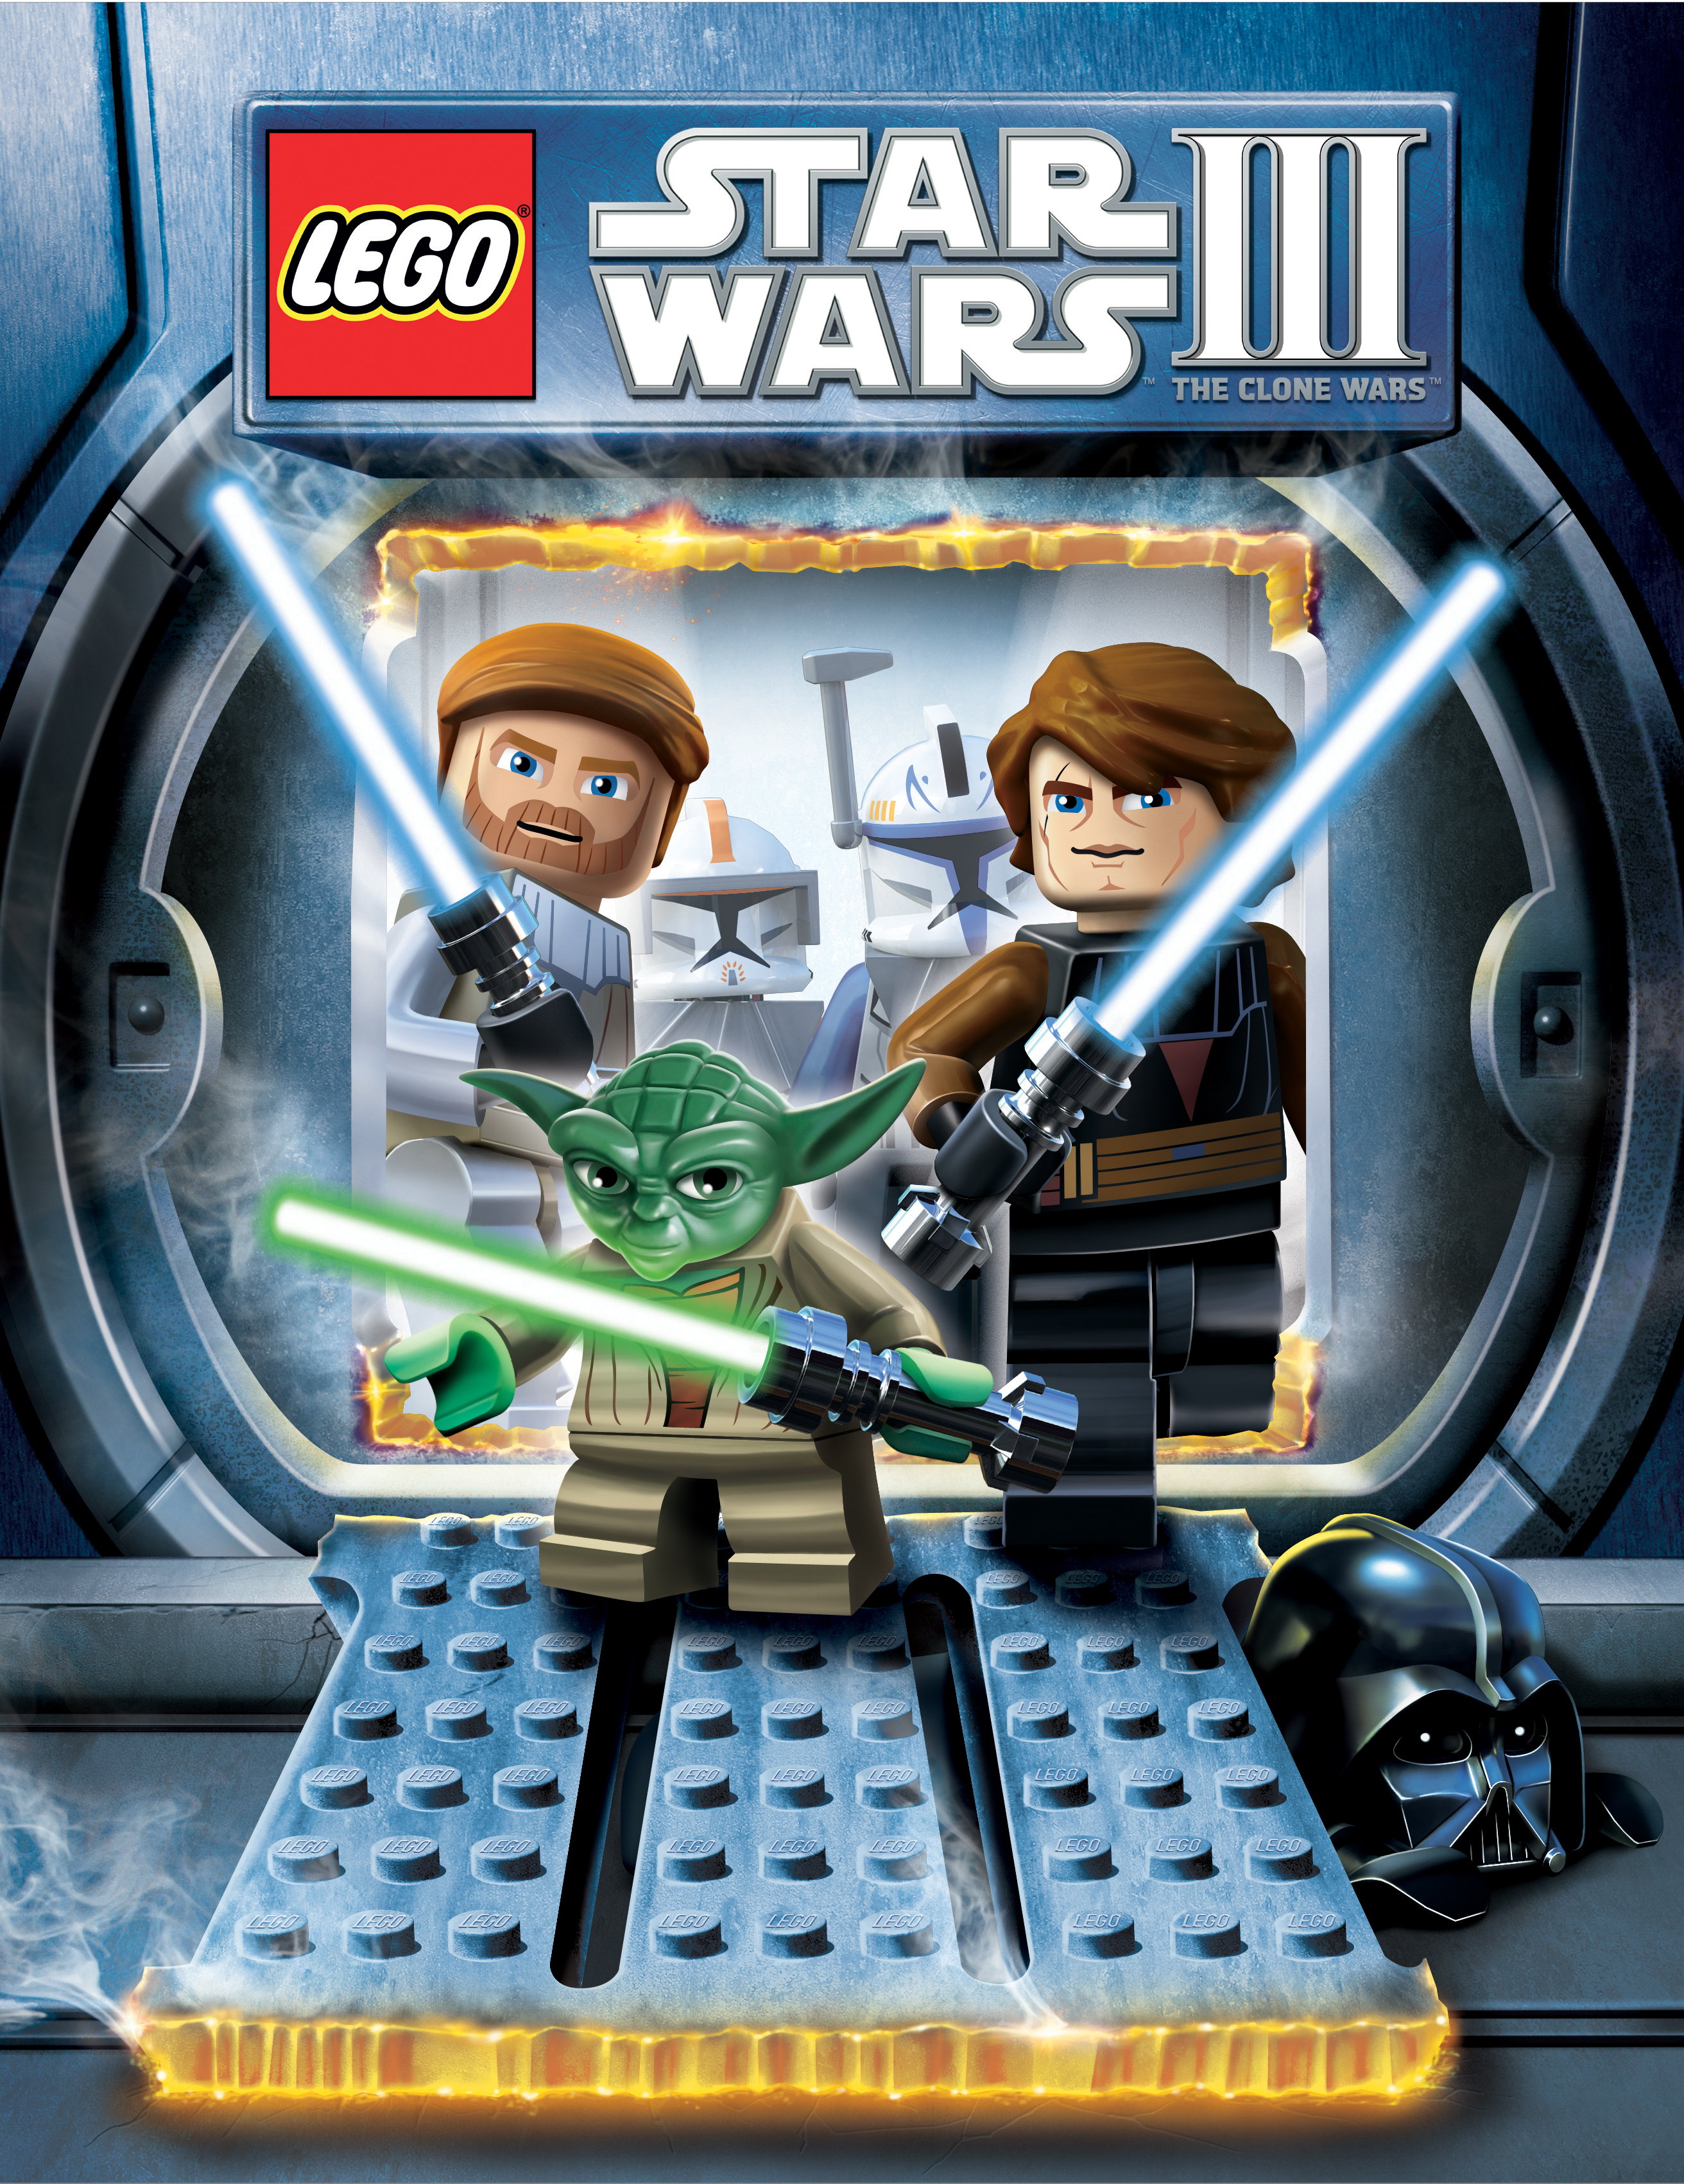 LEGO Star Wars III The Clone Wars Wookieepedia, the